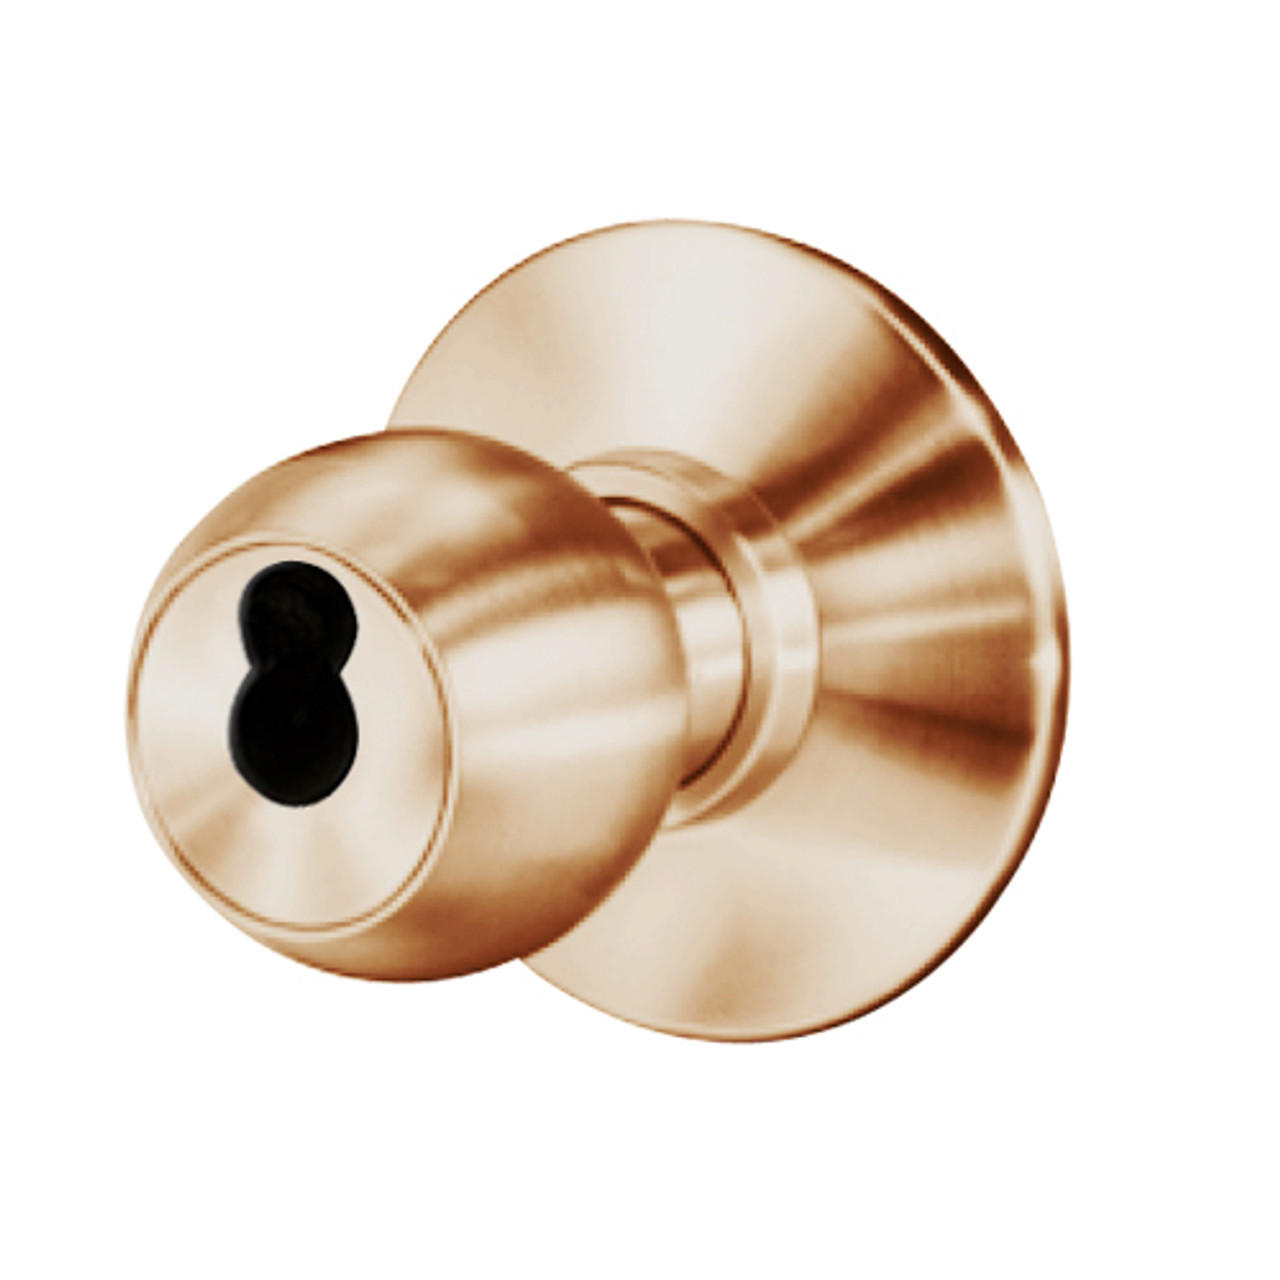 8K37YR4DS3612 Best 8K Series Exit Heavy Duty Cylindrical Knob Locks with Round Style in Satin Bronze